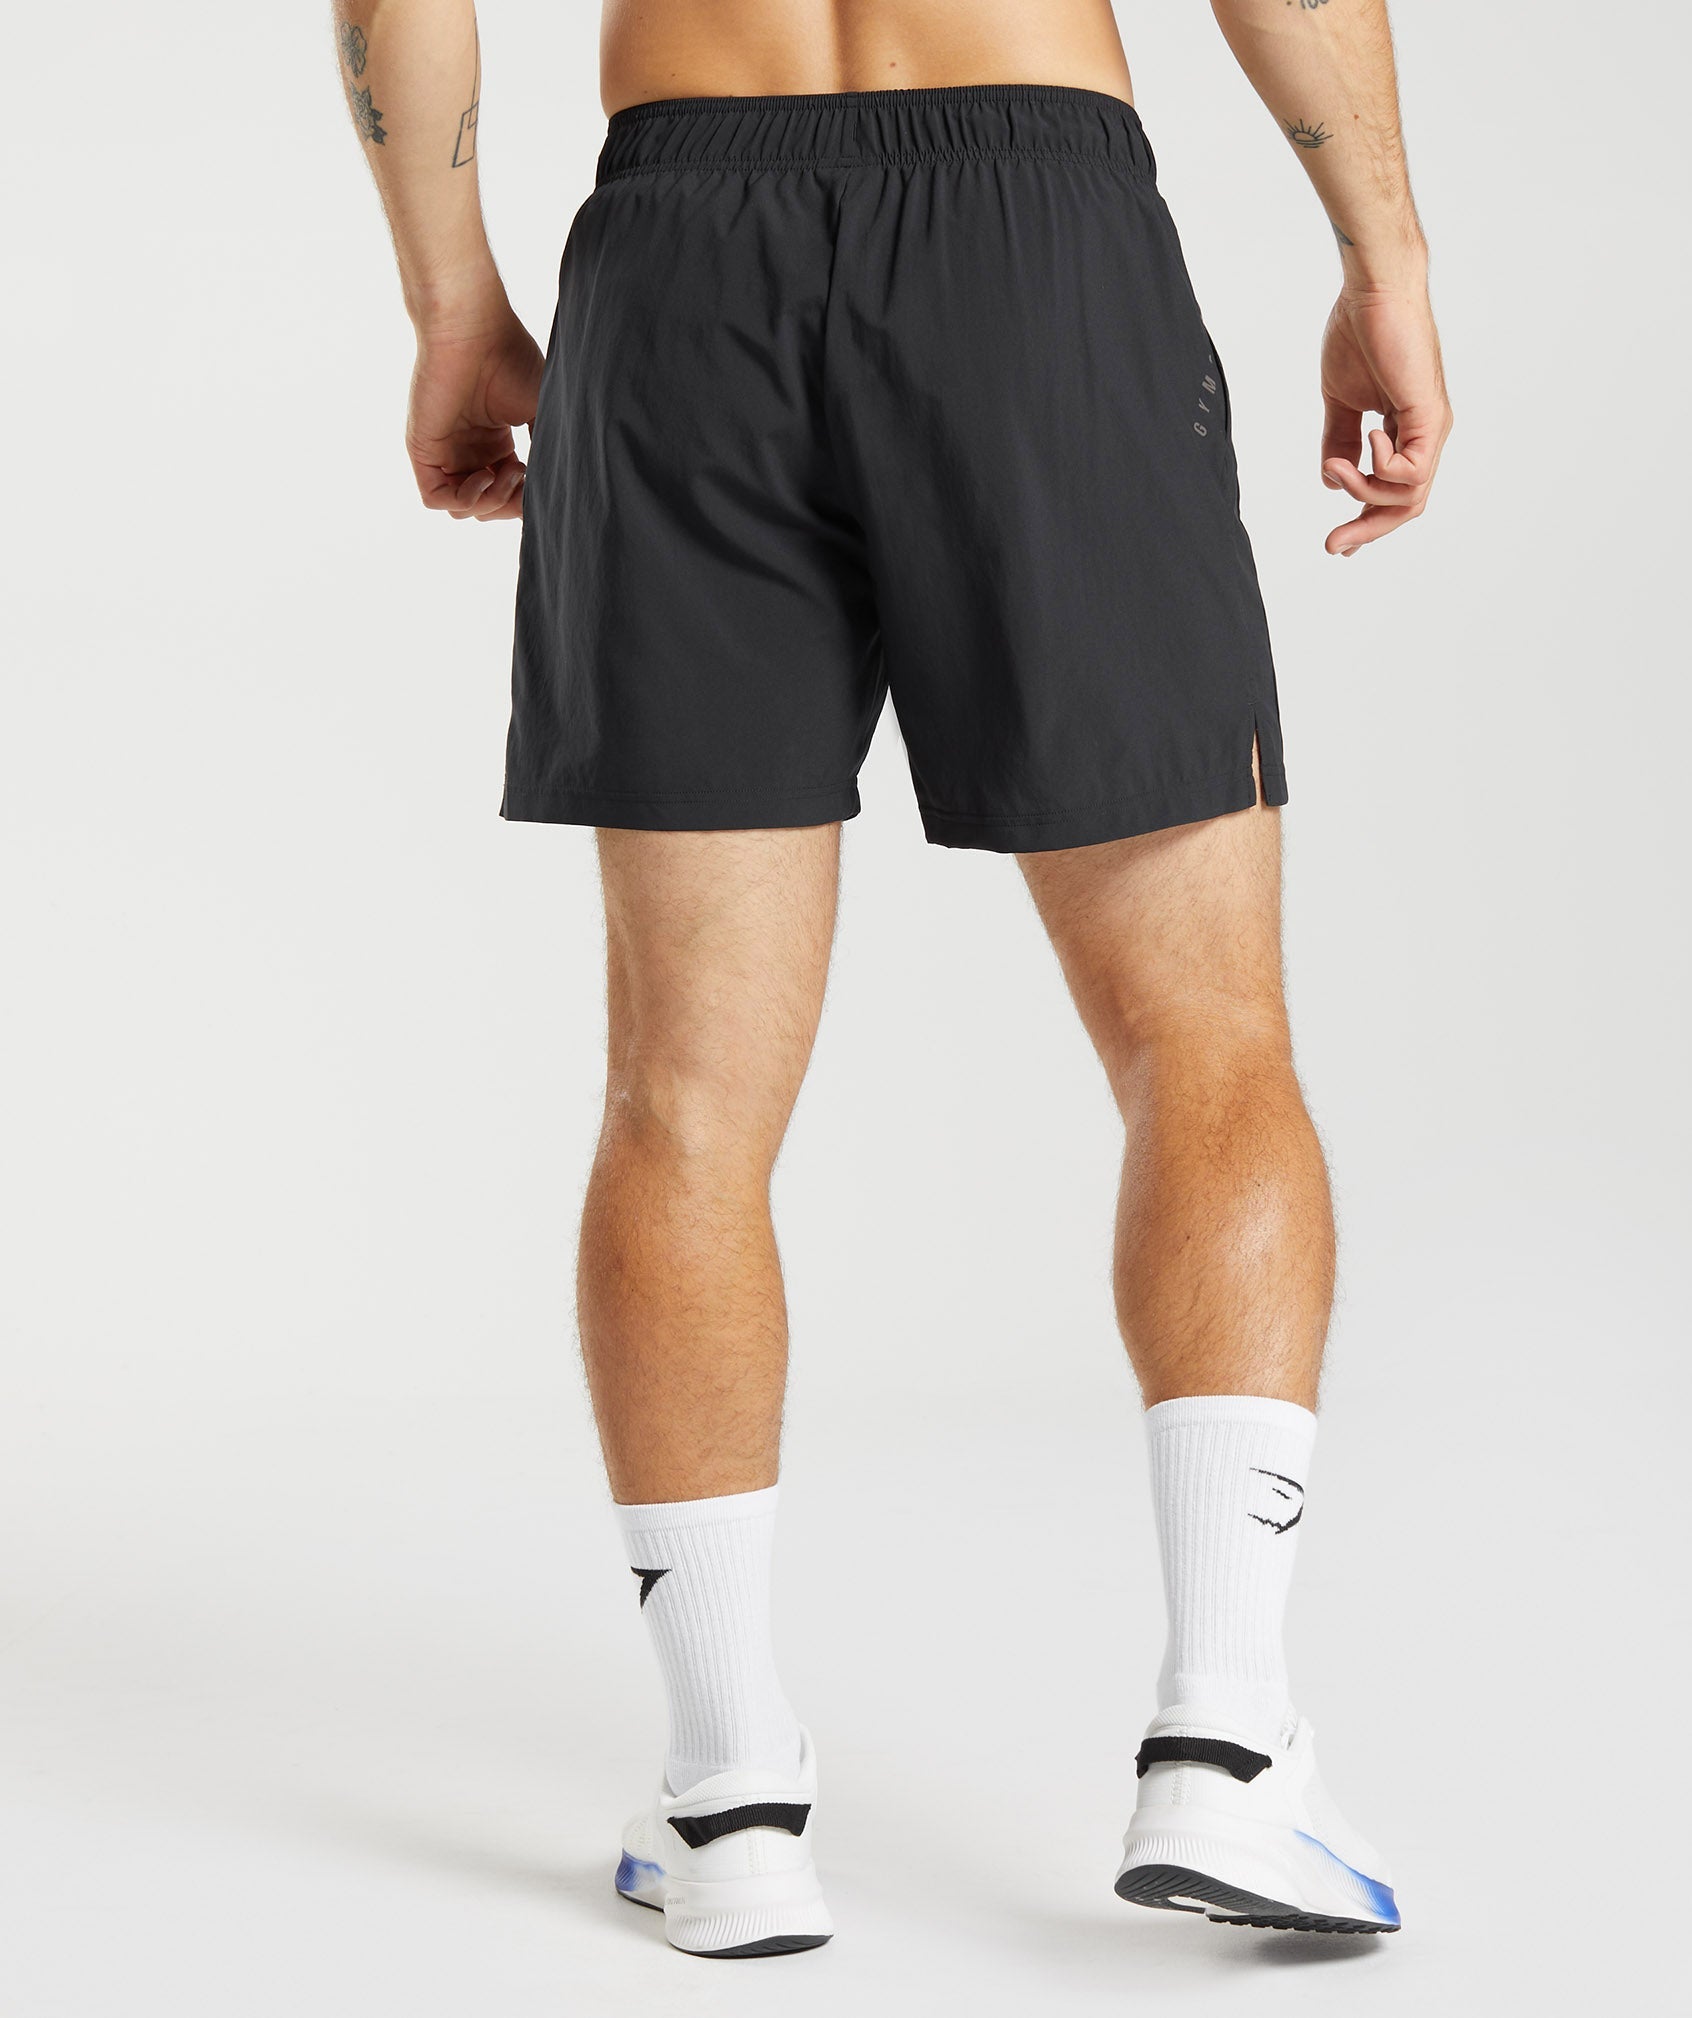 Men's Black Athletic Shorts Bathing Suit (RBG Edition)